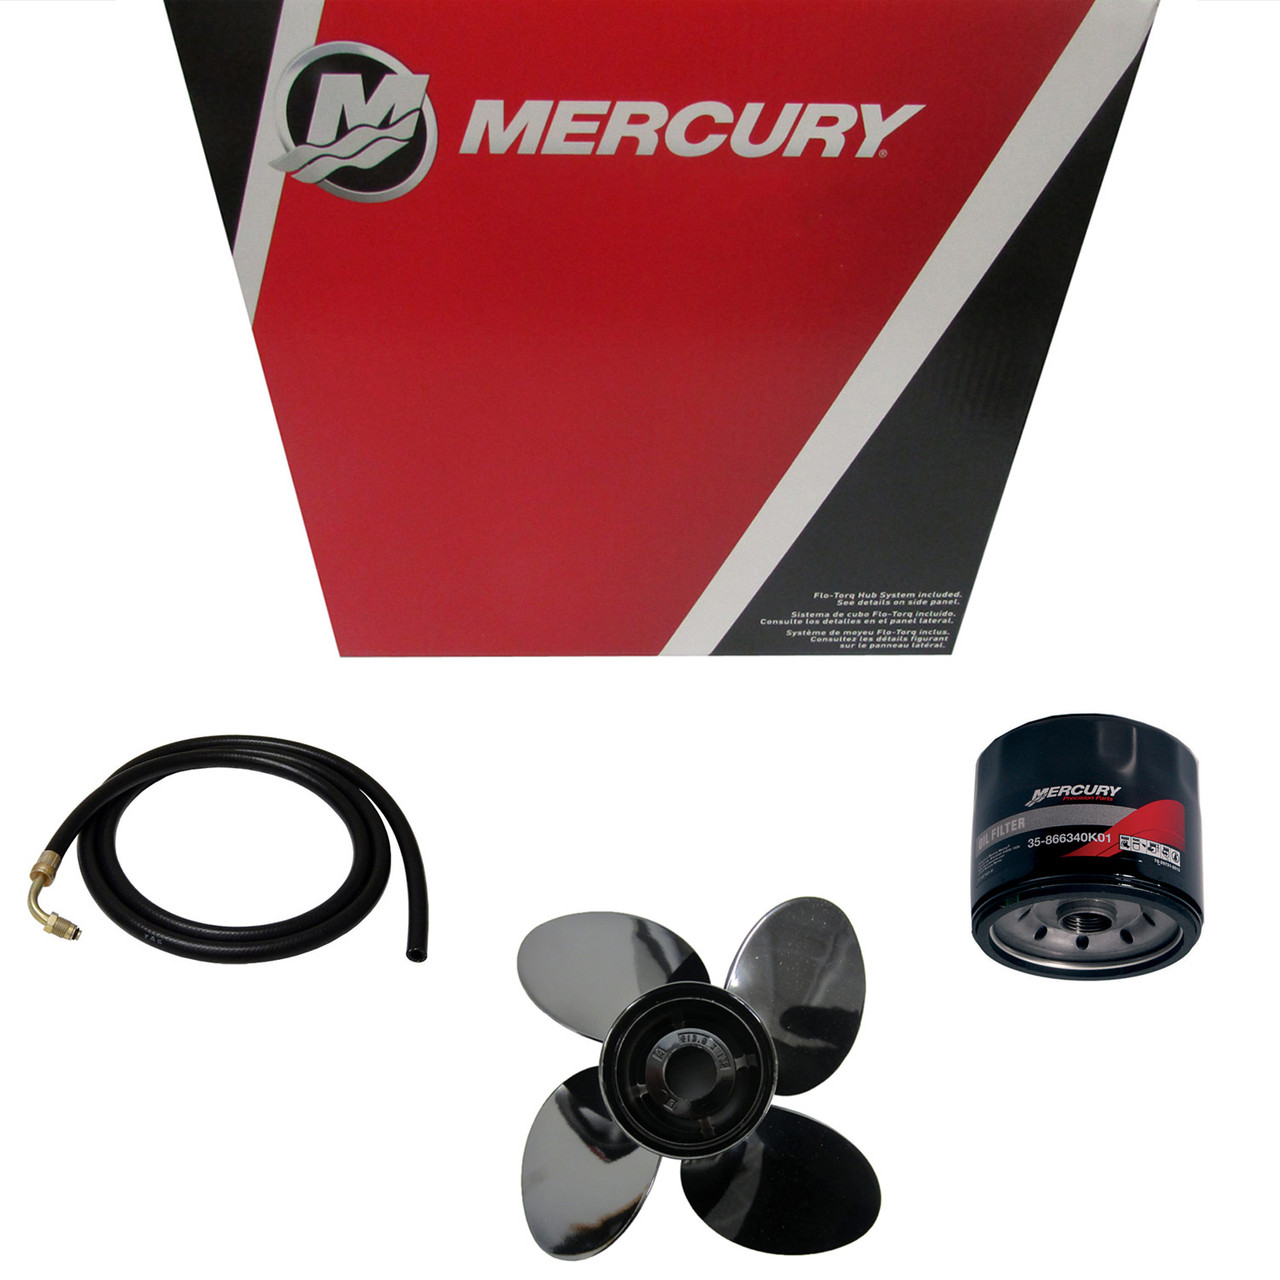 Mercury Marine / Mercruiser New OEM Ignition Coil, 339-803559A02